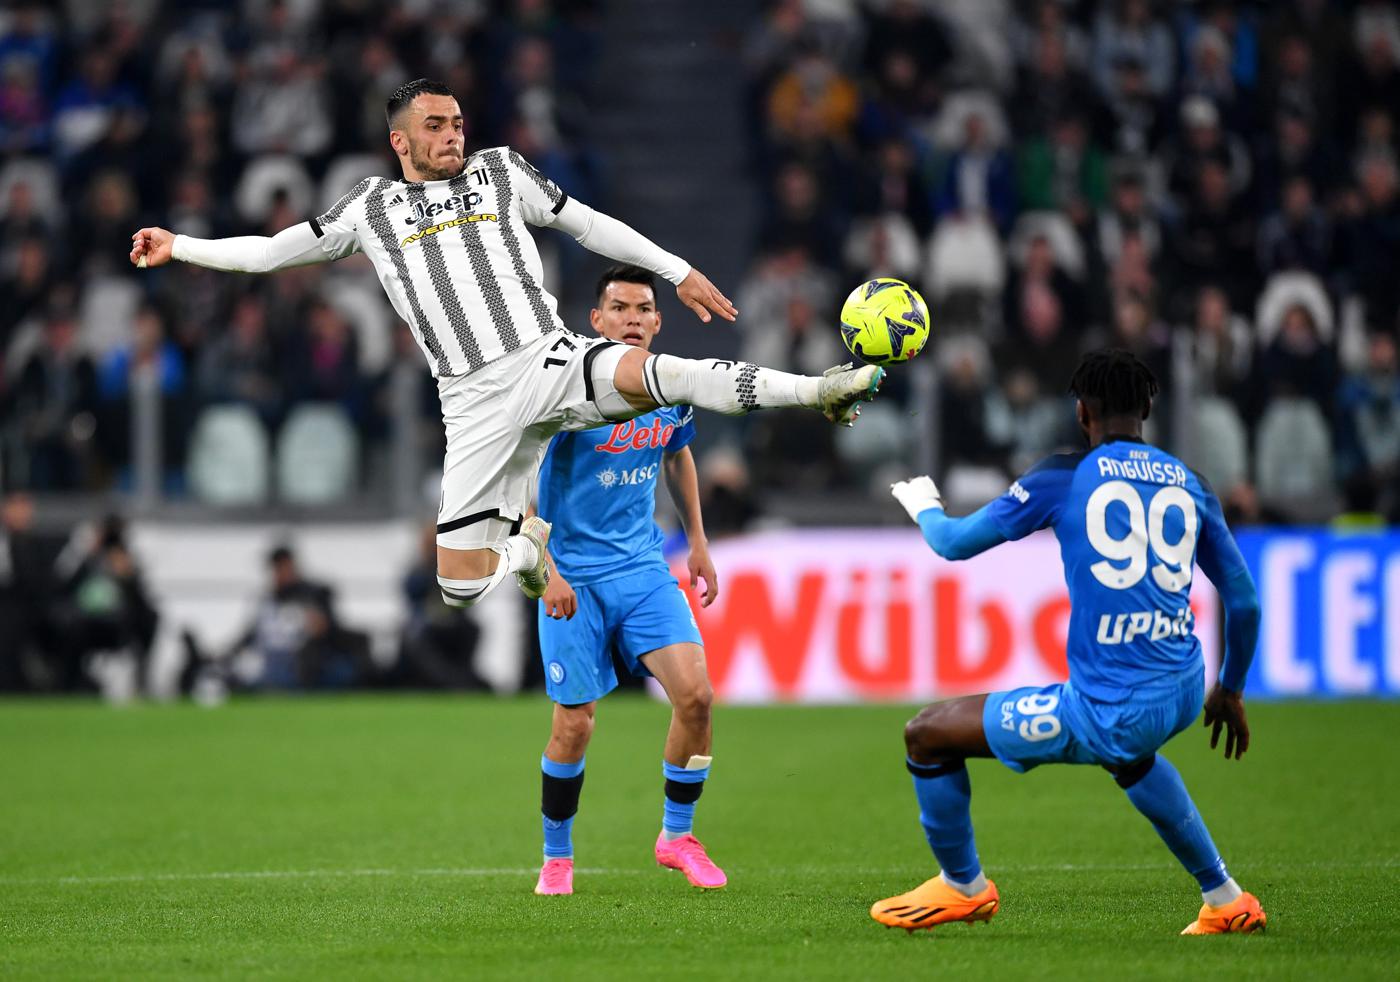 Juventus vs Napoli - 0-1. Italian Championship, round of 31. Match review, statistics.